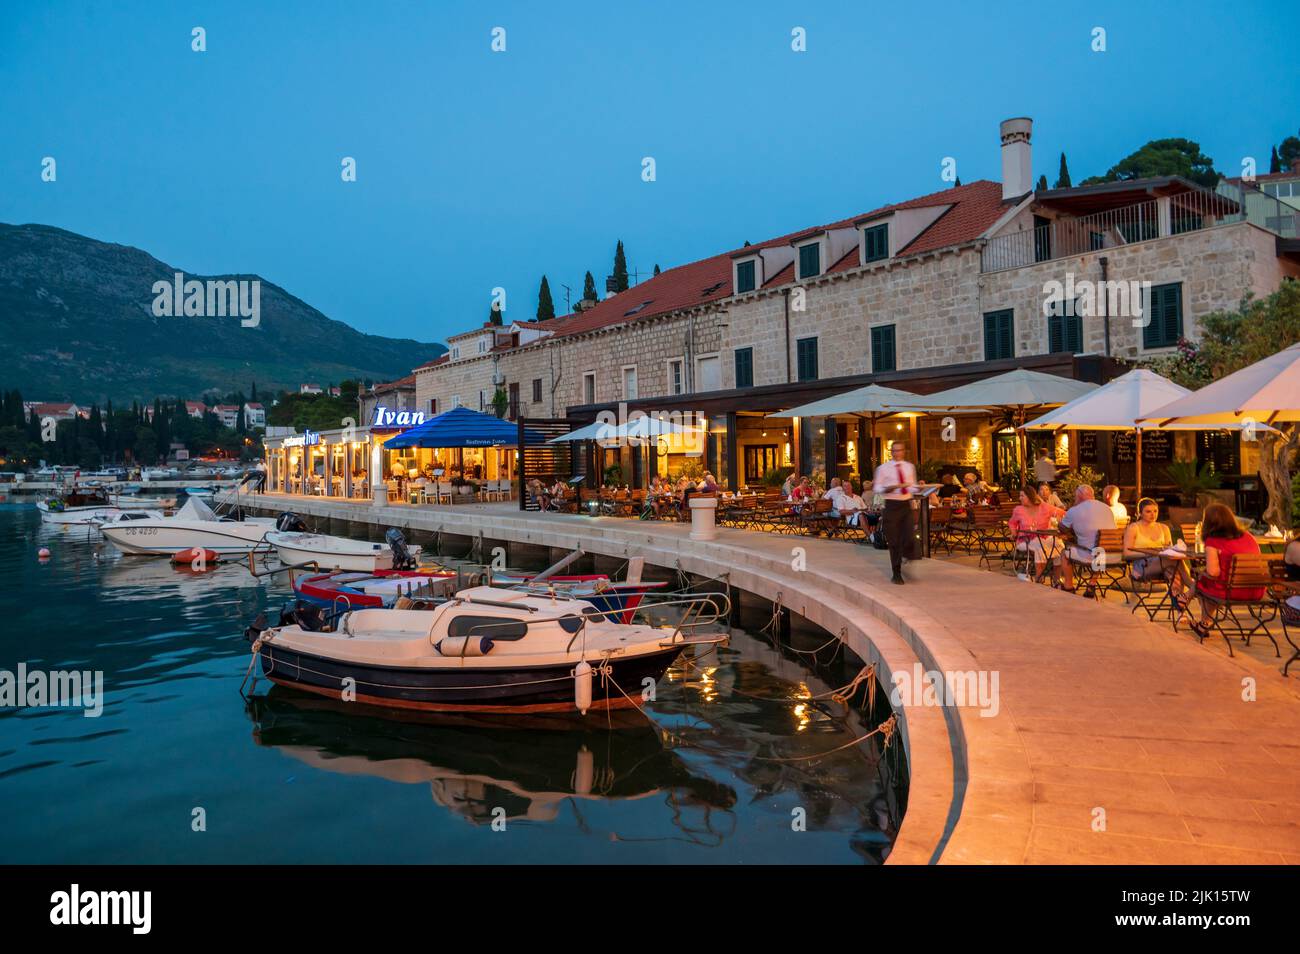 Restaurants on the waterfront, Cavtat on the Adriatic Sea, Cavtat, Dubrovnik Riviera, Croatia, Europe Stock Photo